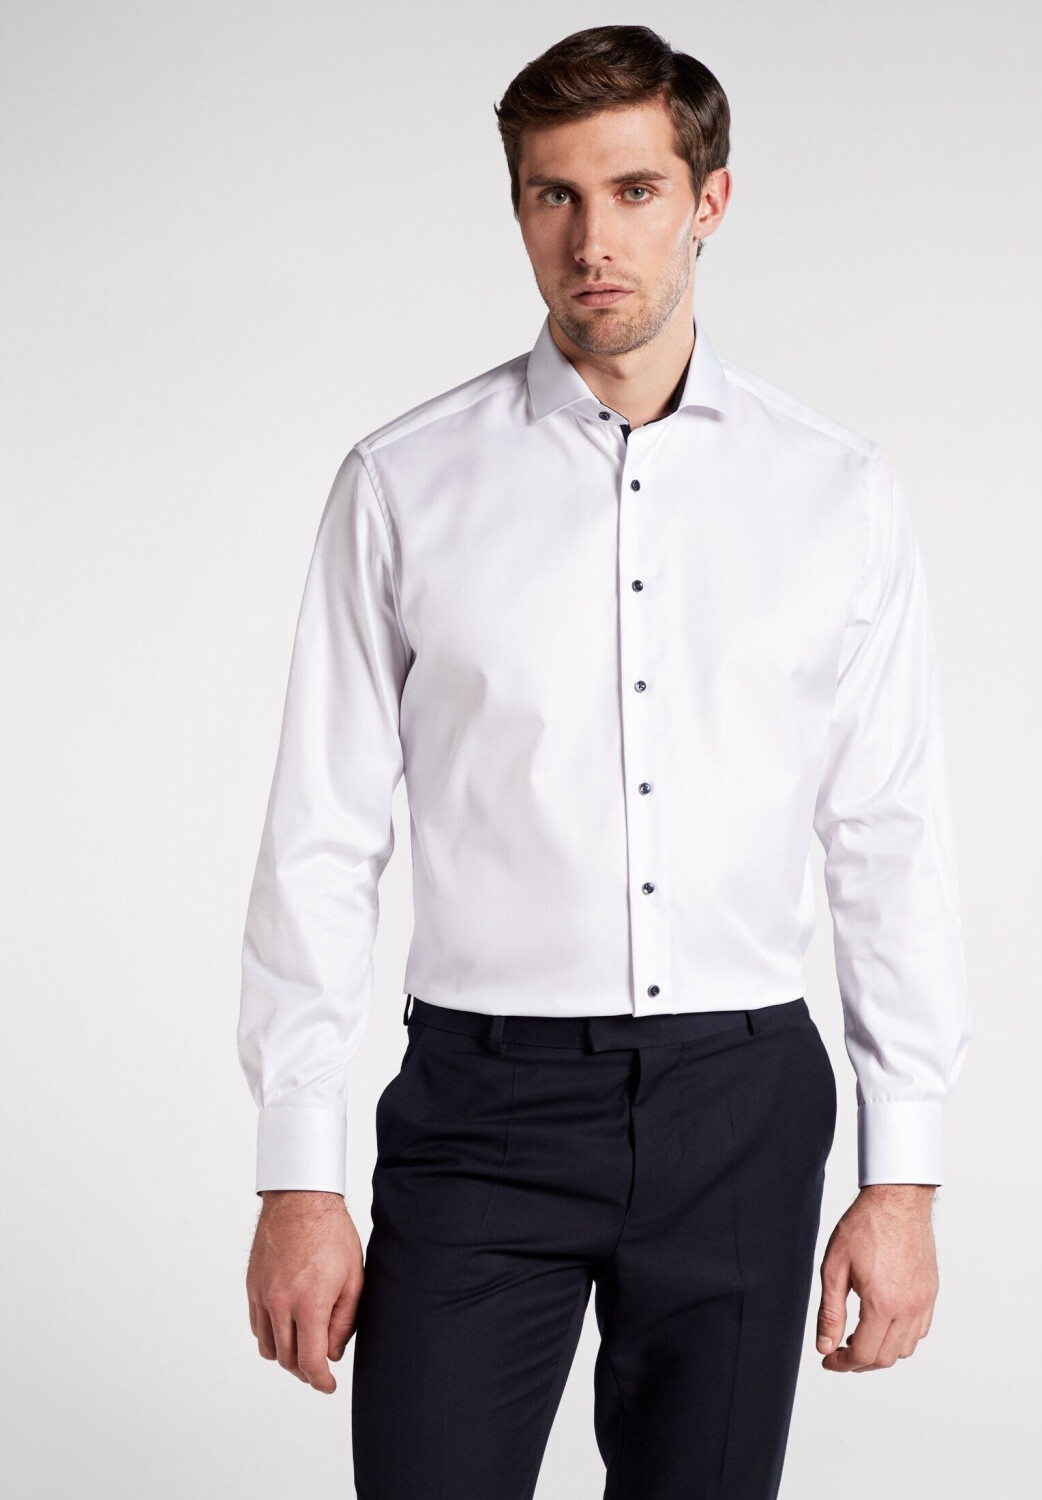 Shirt € Modern ab Preisvergleich | Twill (8819-00-x15v) weiß bei 47,20 Cover Fit Eterna